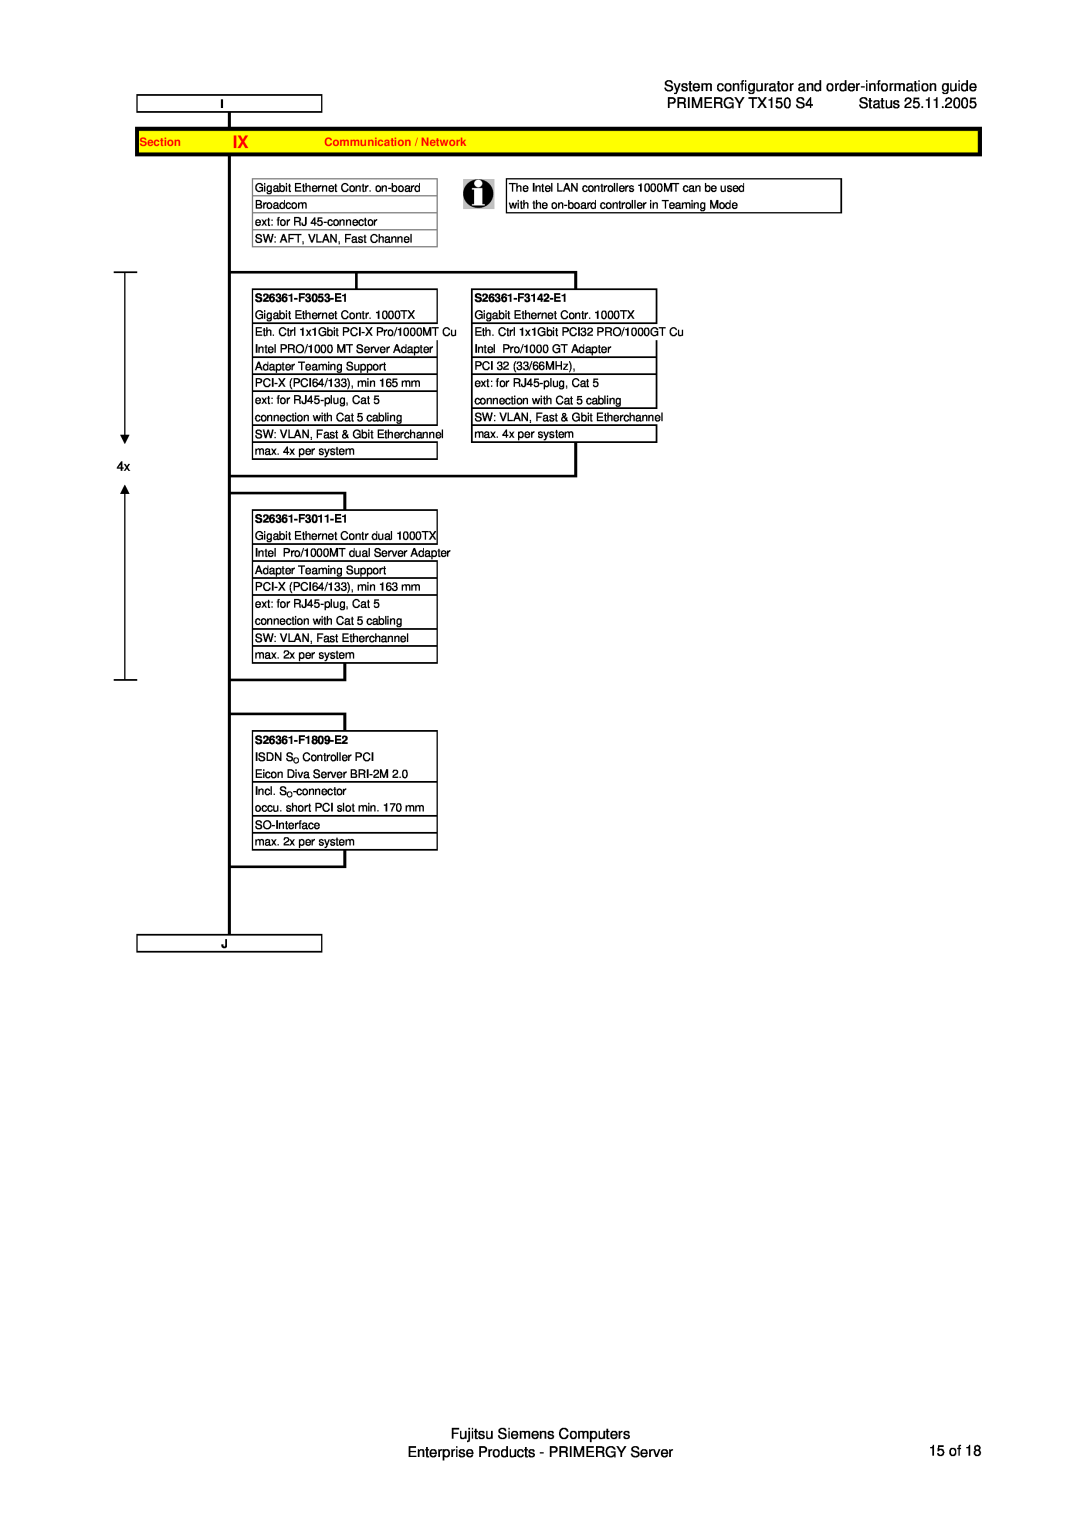 Fujitsu System configurator and order-information guide, PRIMERGY TX150 S4, Fujitsu Siemens Computers, Status, 15 of 